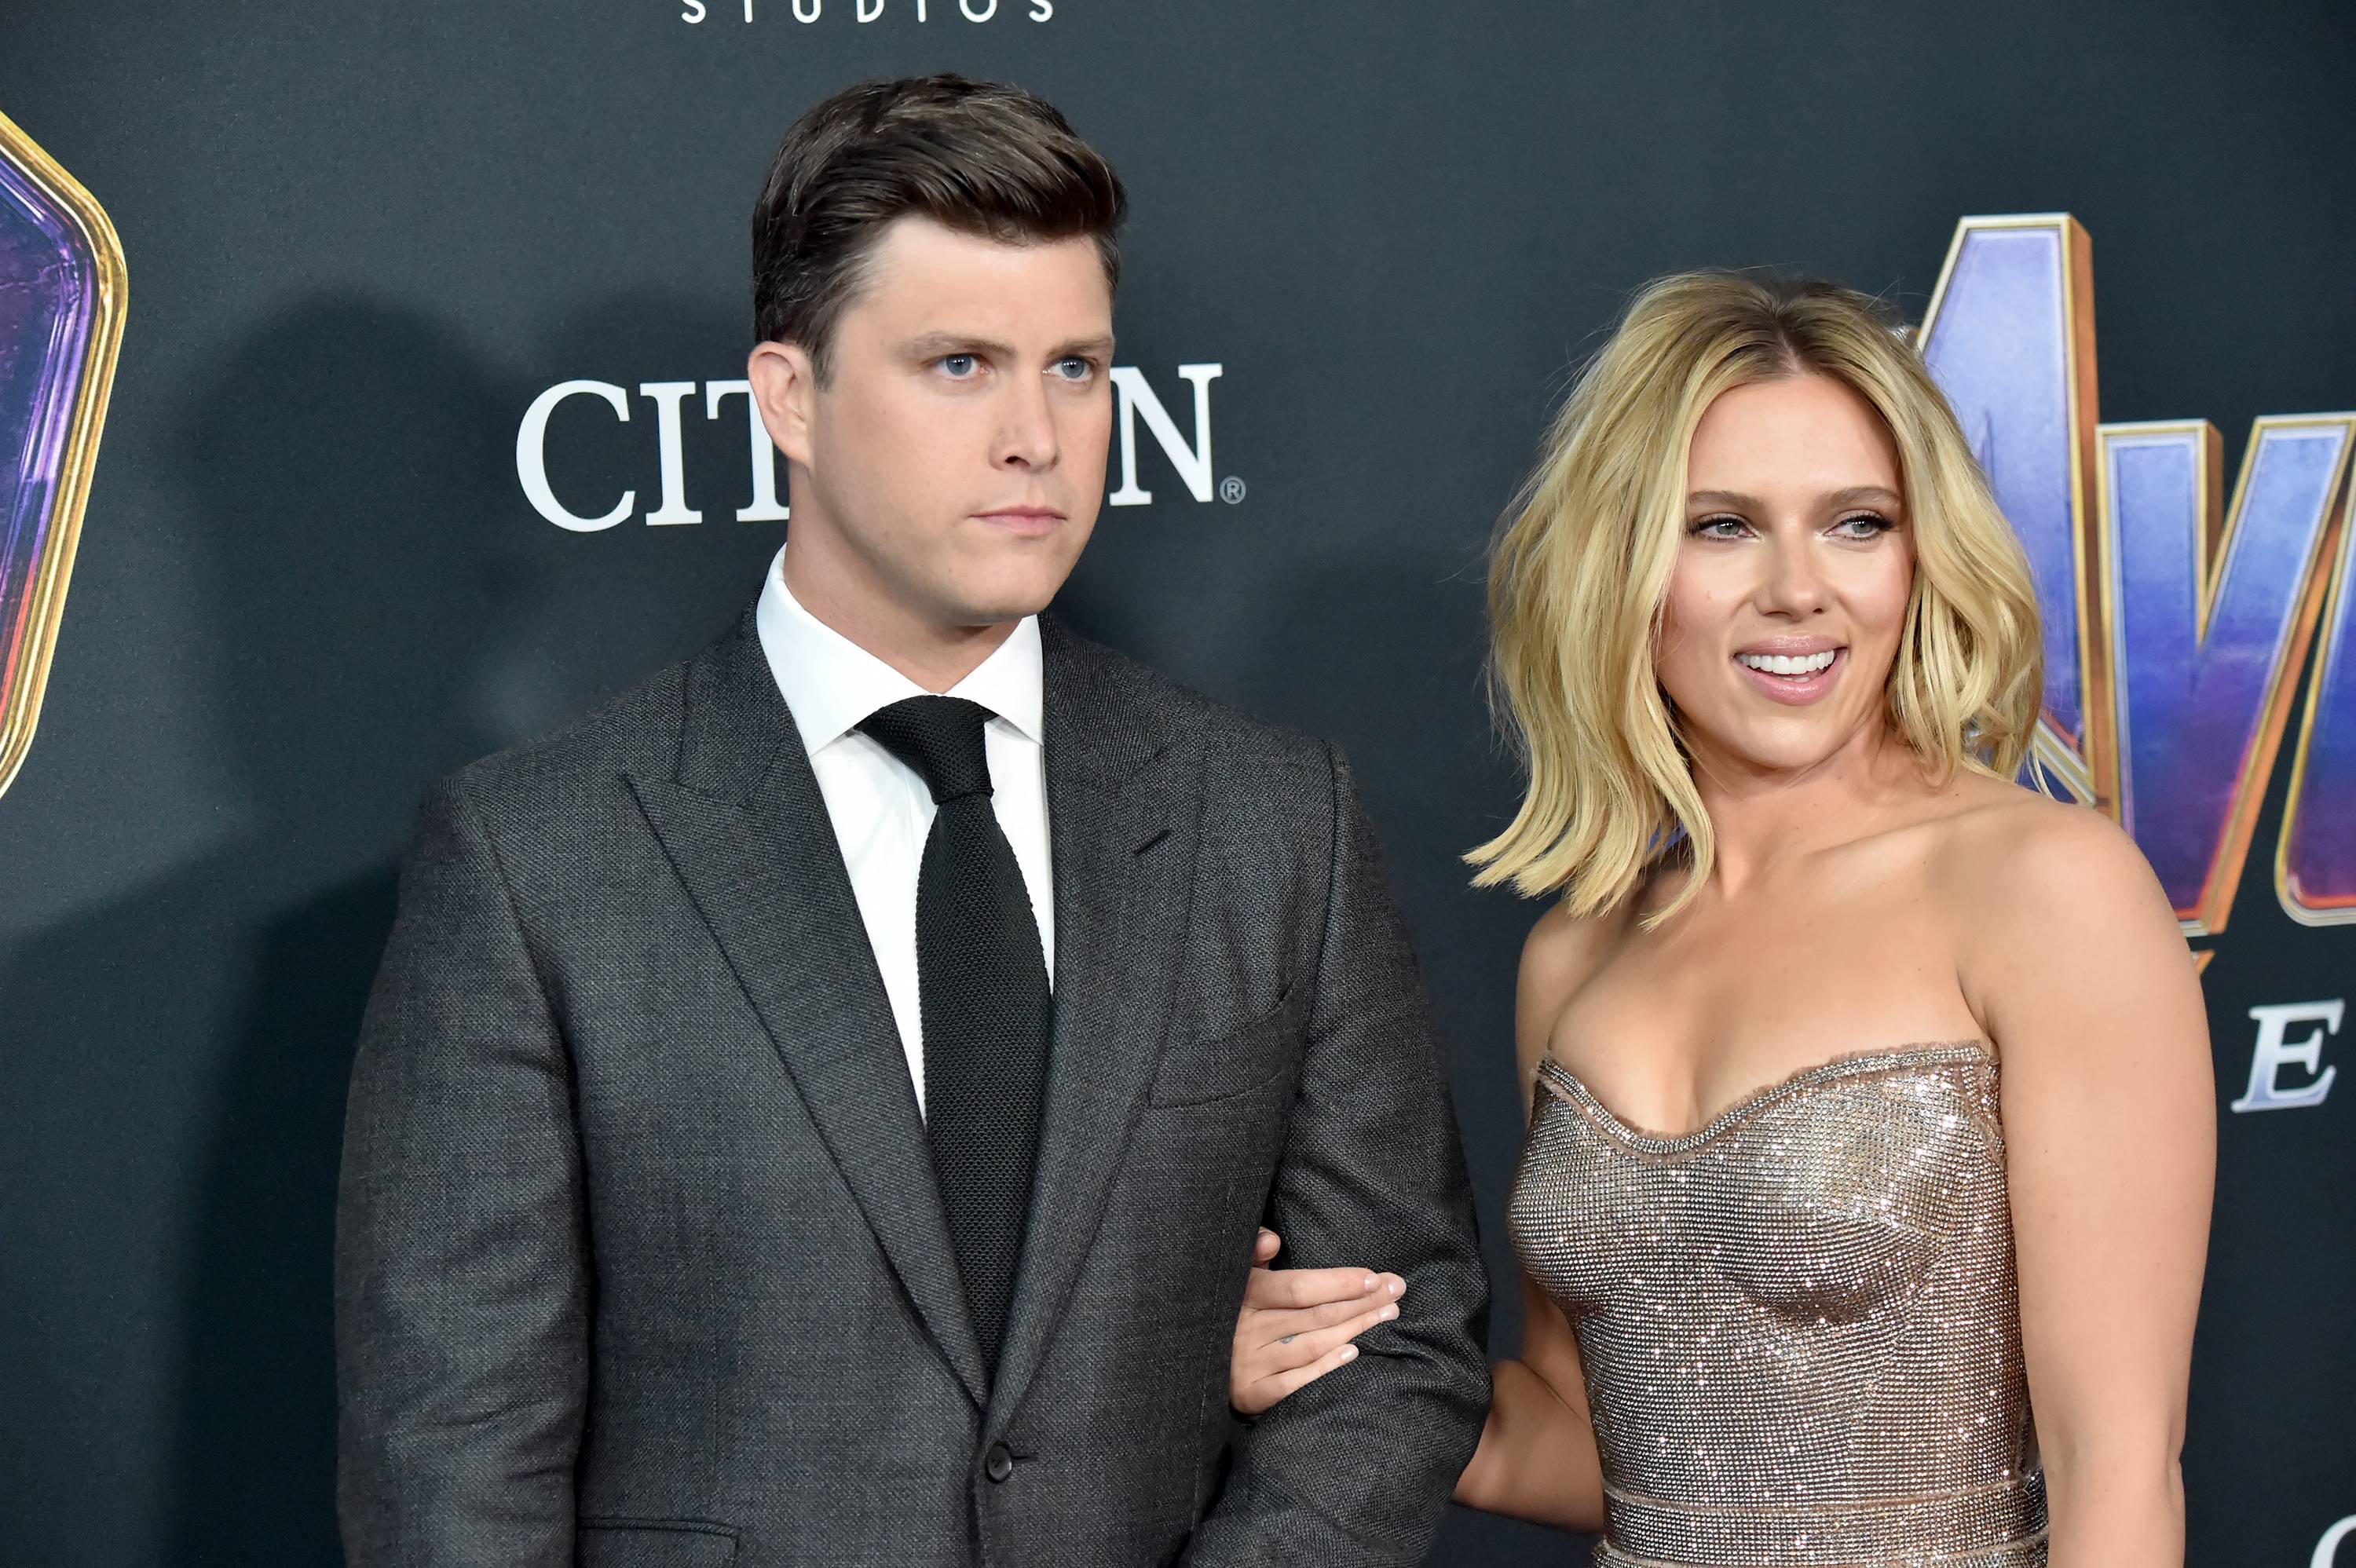 Saturday Night Live's Colin Jost and Scarlett Johansson are engaged.